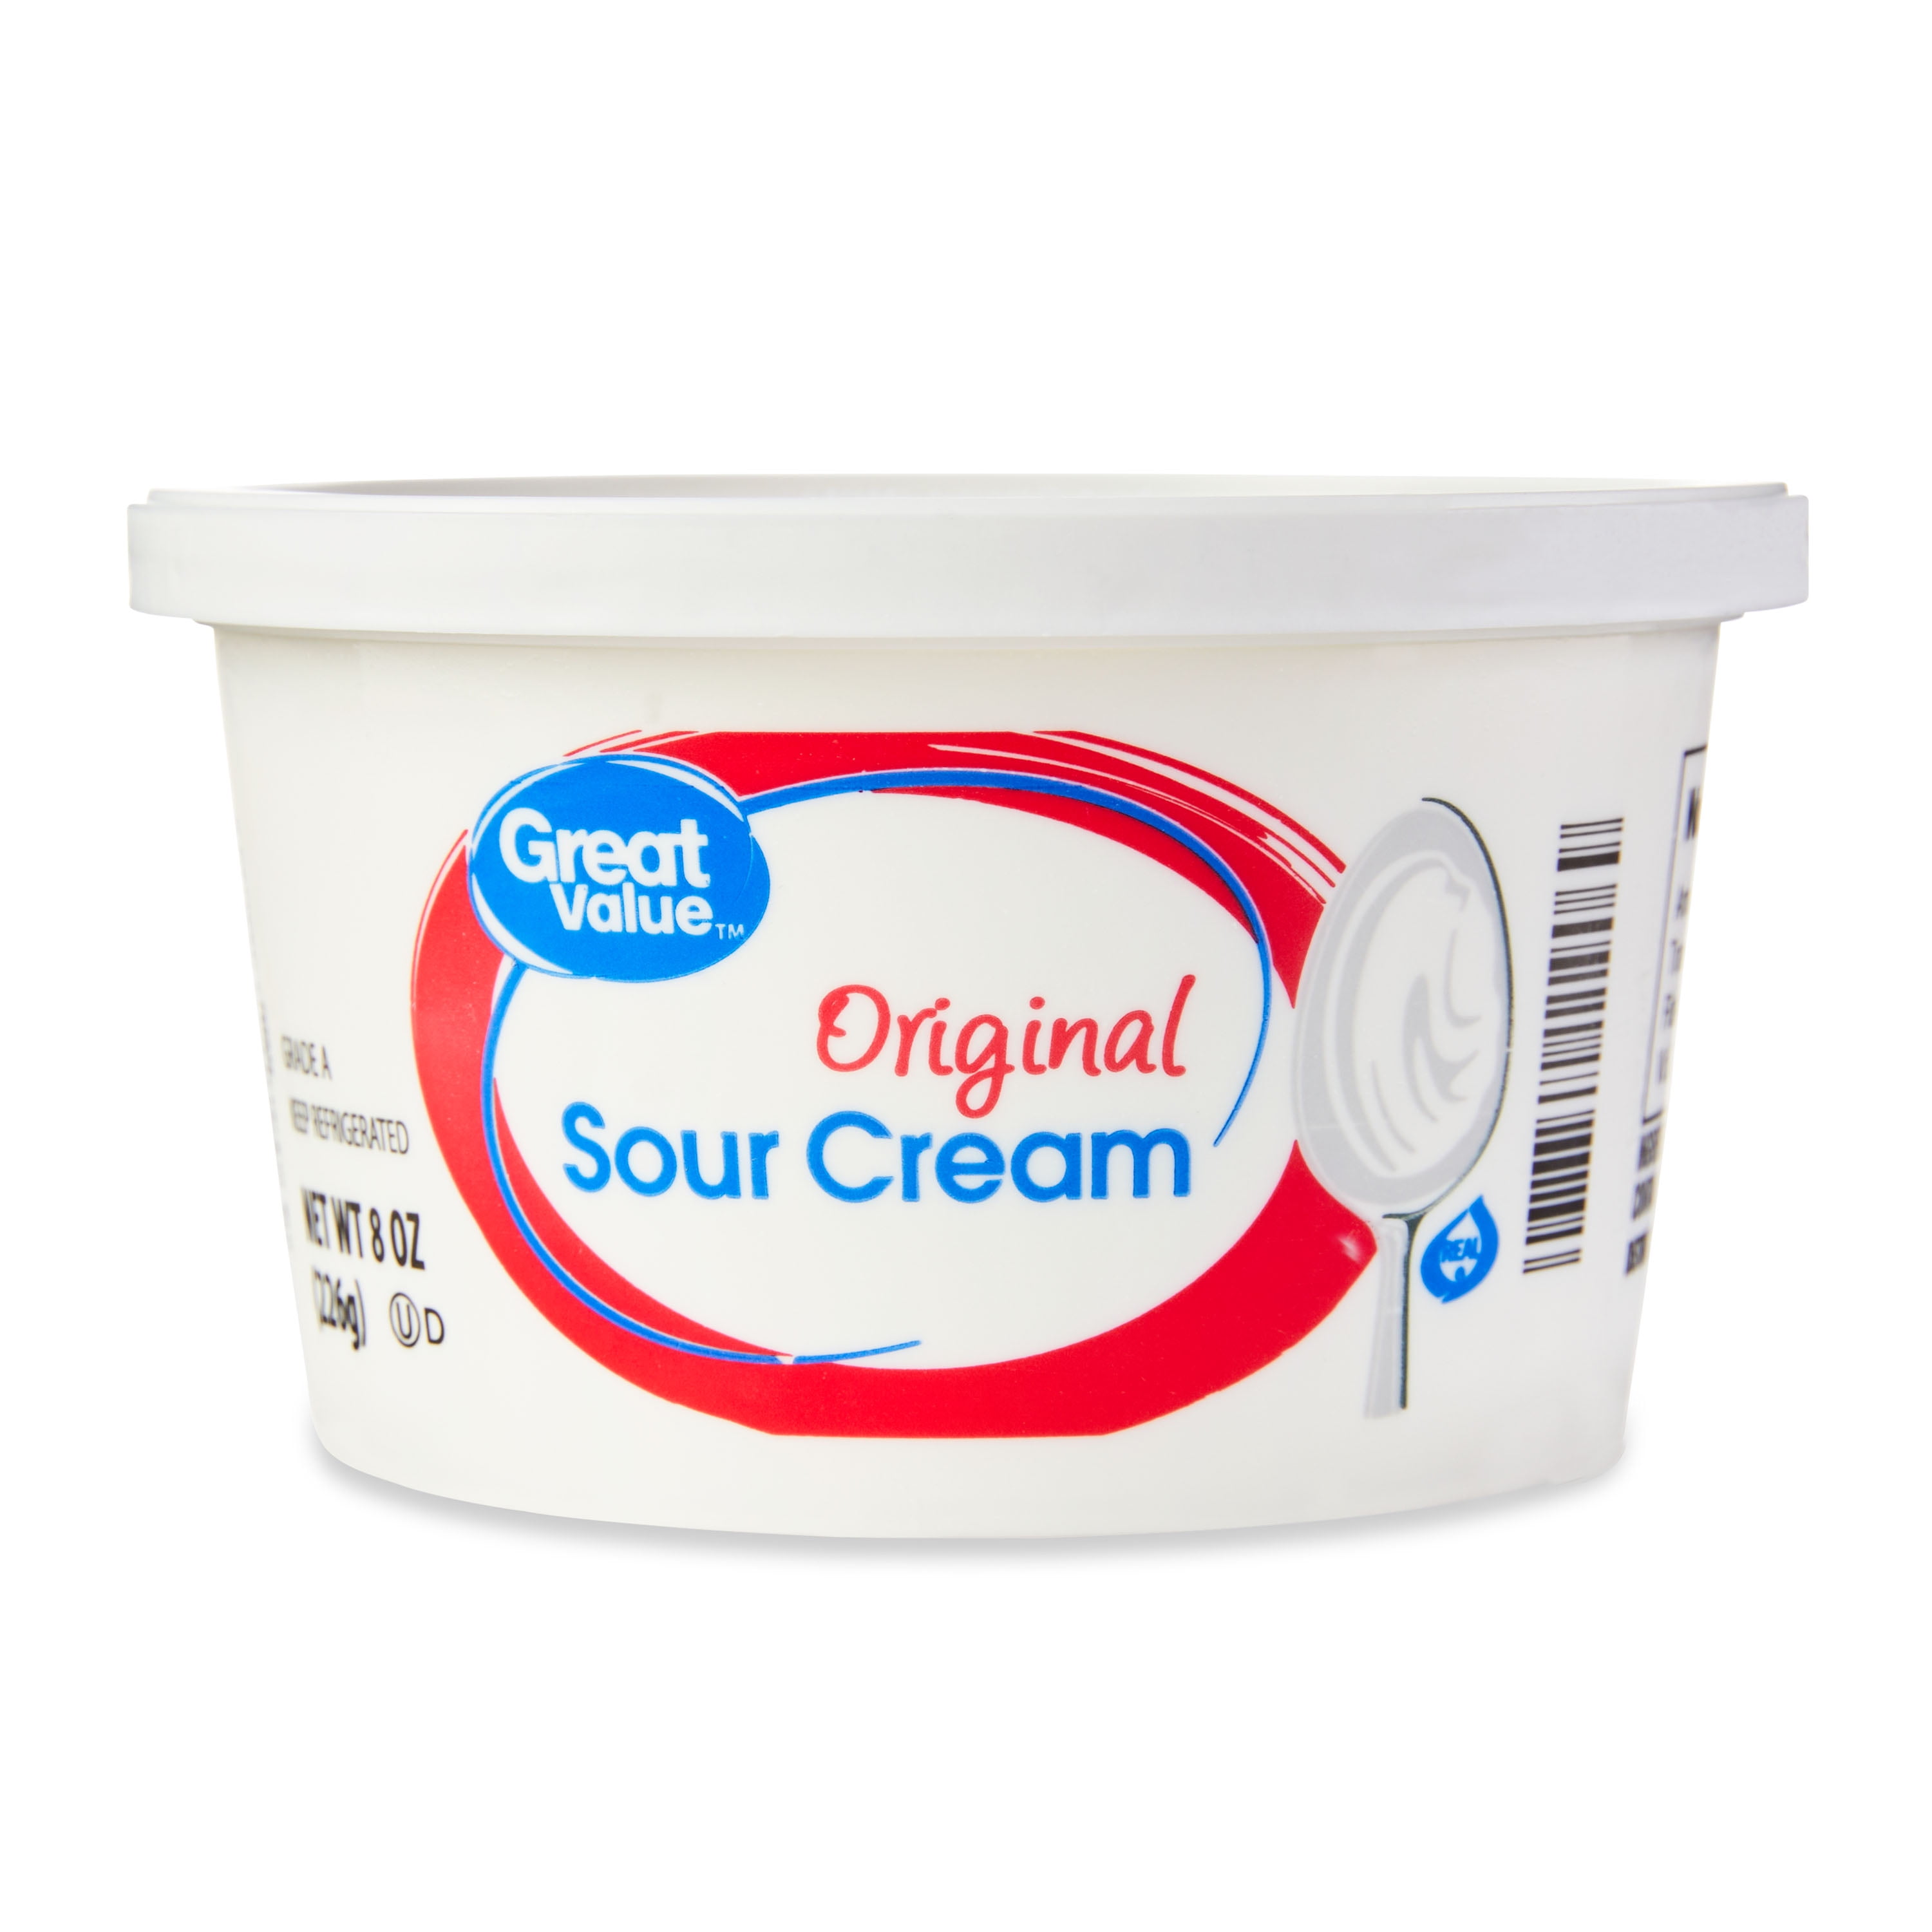 Great Value All Natural Sour Cream, 8 oz Tub